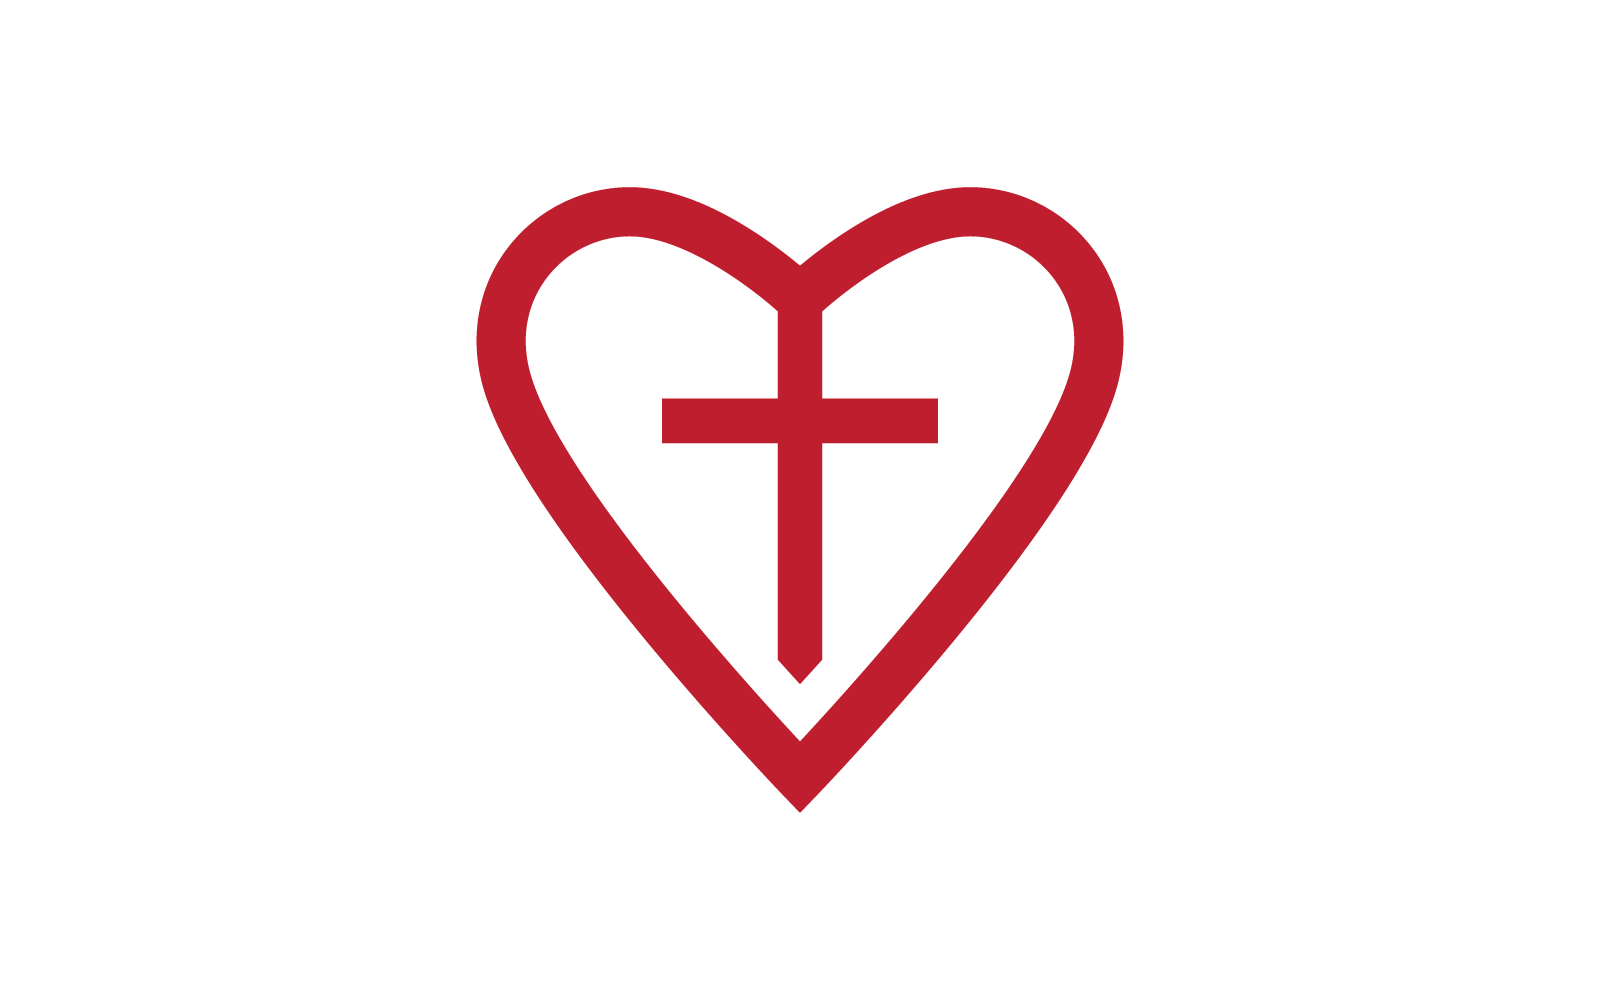 Cross and love logo illustration flat design